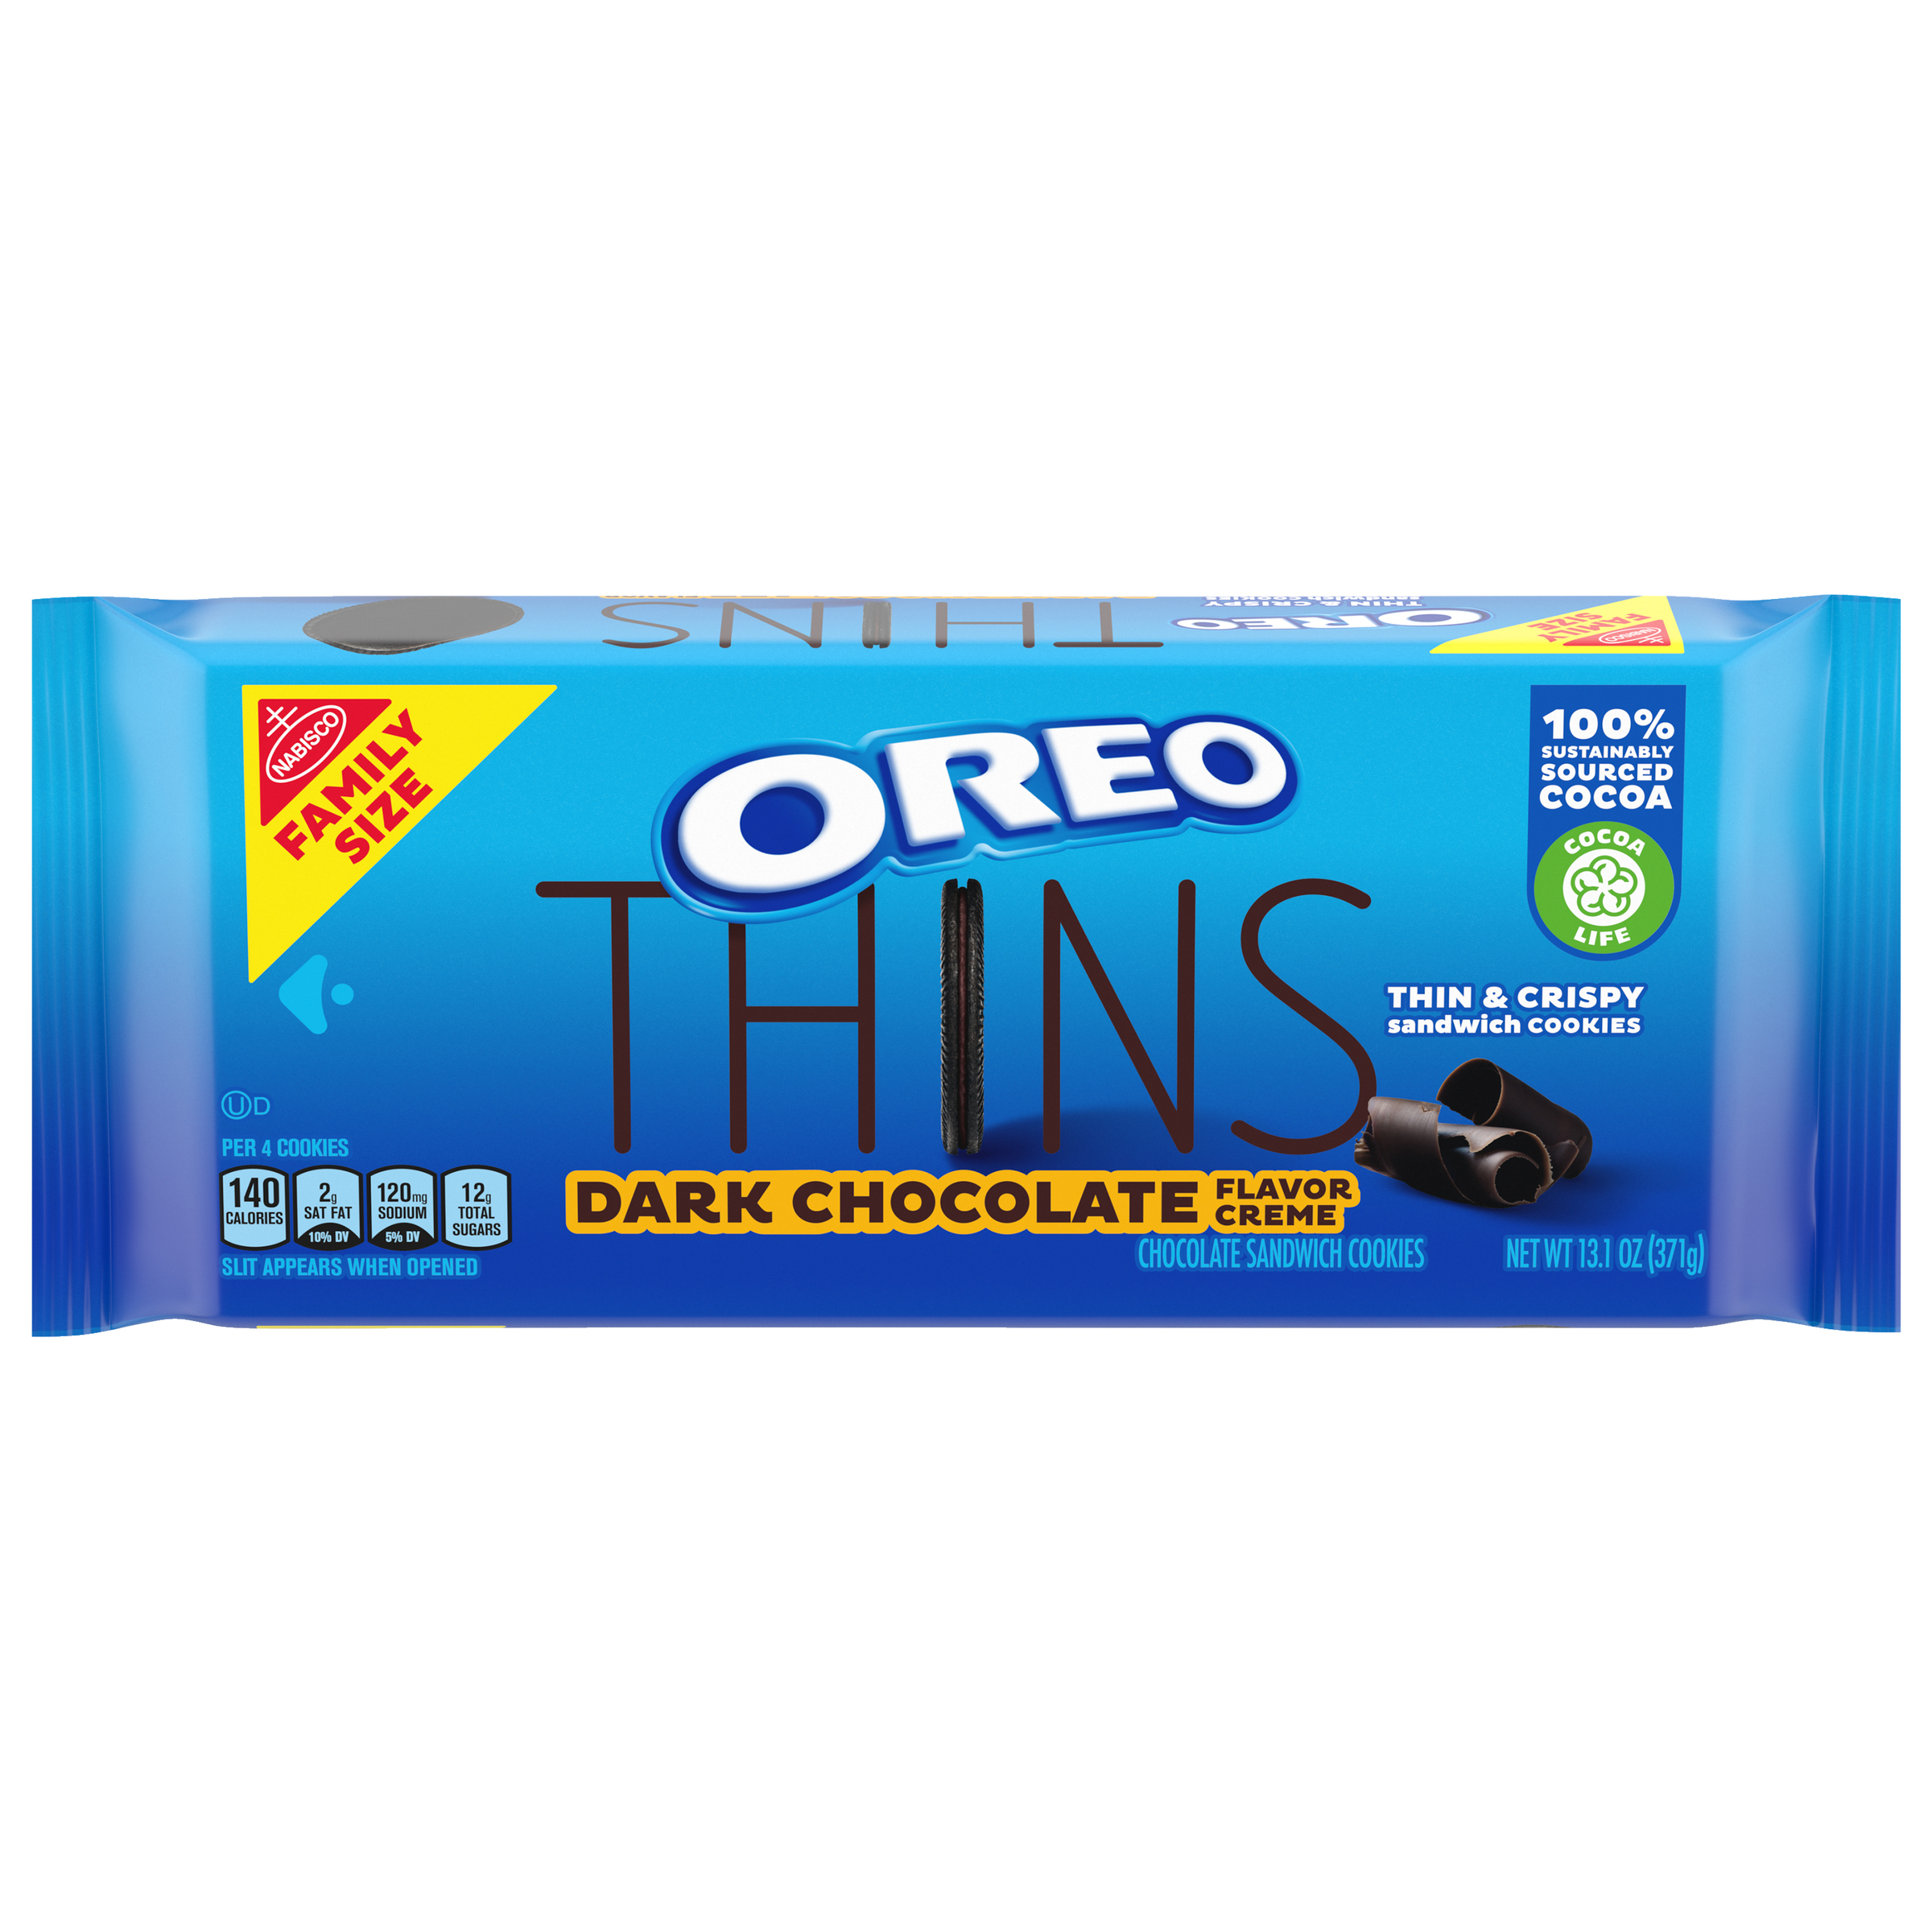 OREO Thins Dark Chocolate Sandwich Cookies 13.1 oz